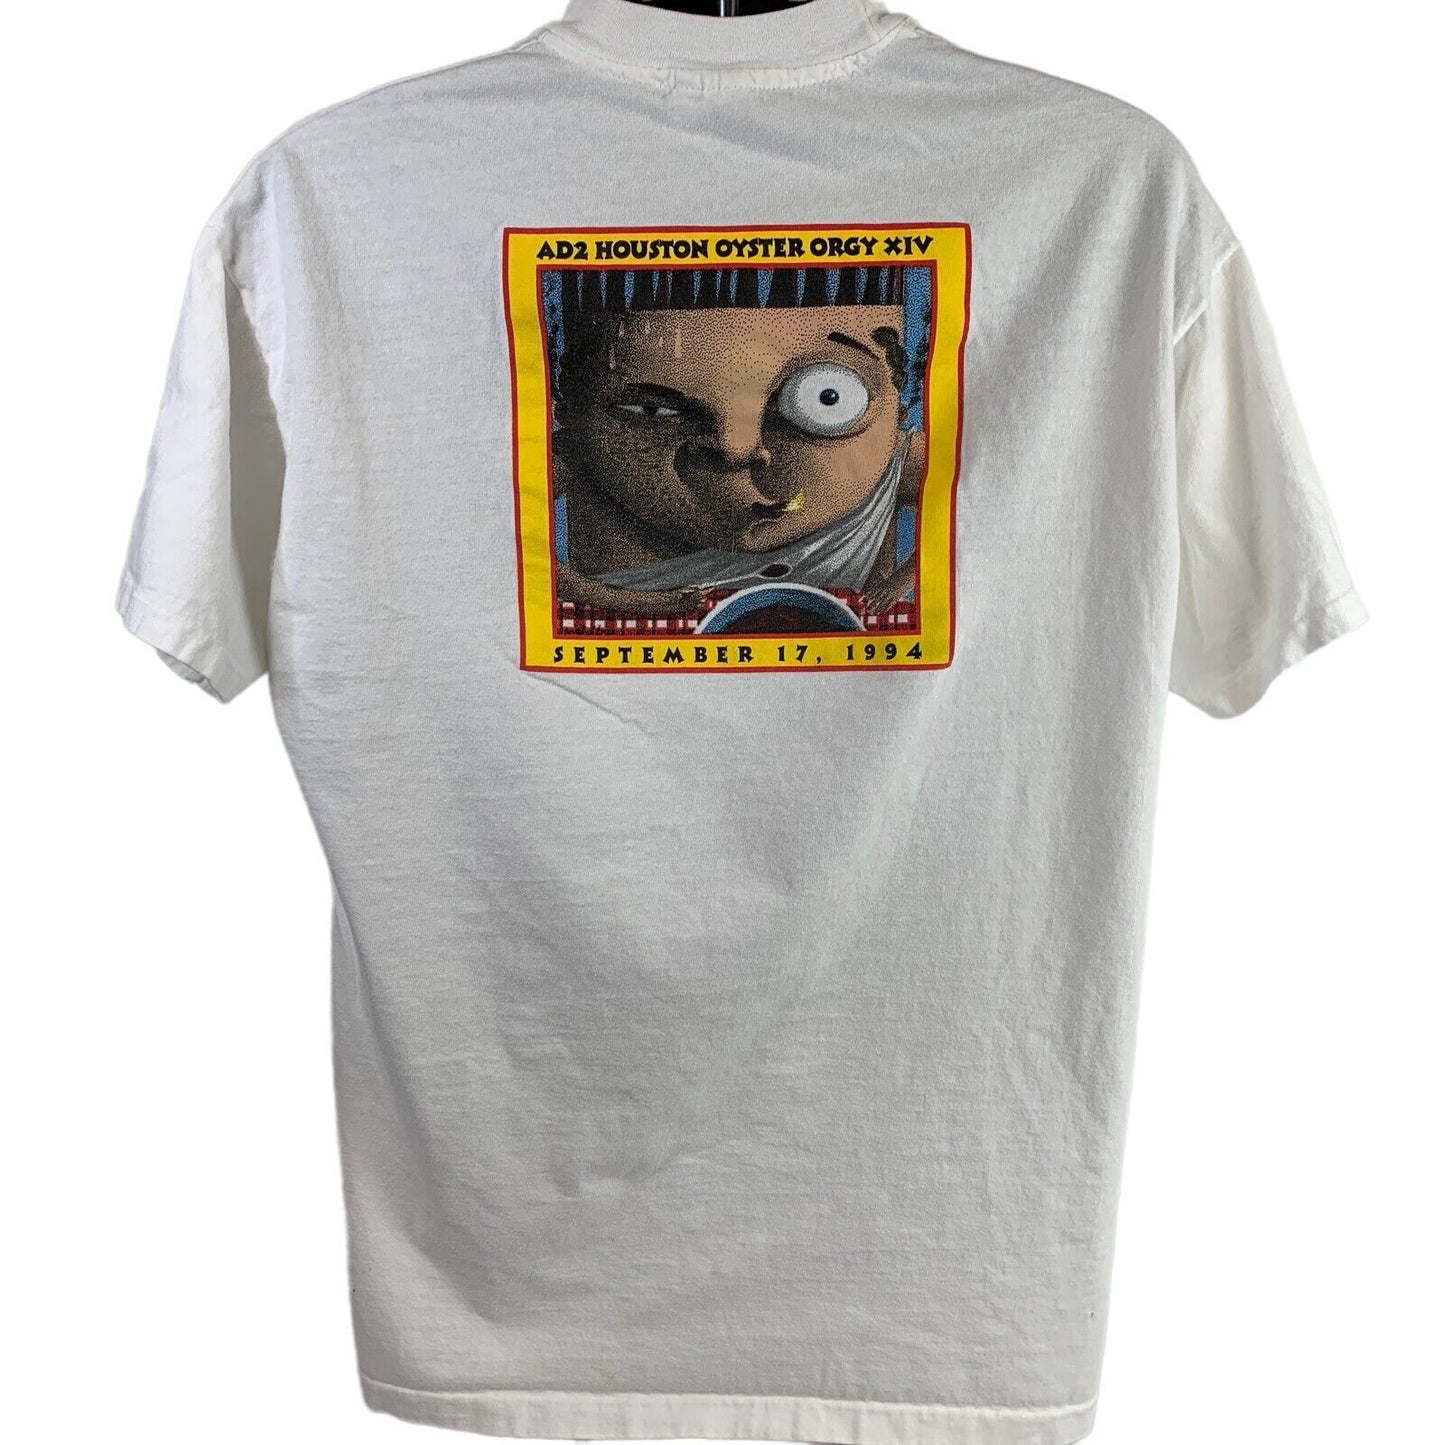 AD2 Houston Oyster Orgy Vintage 90s Camiseta 1994 Texas Ad 2 Hecho en EE.UU. Camiseta XL